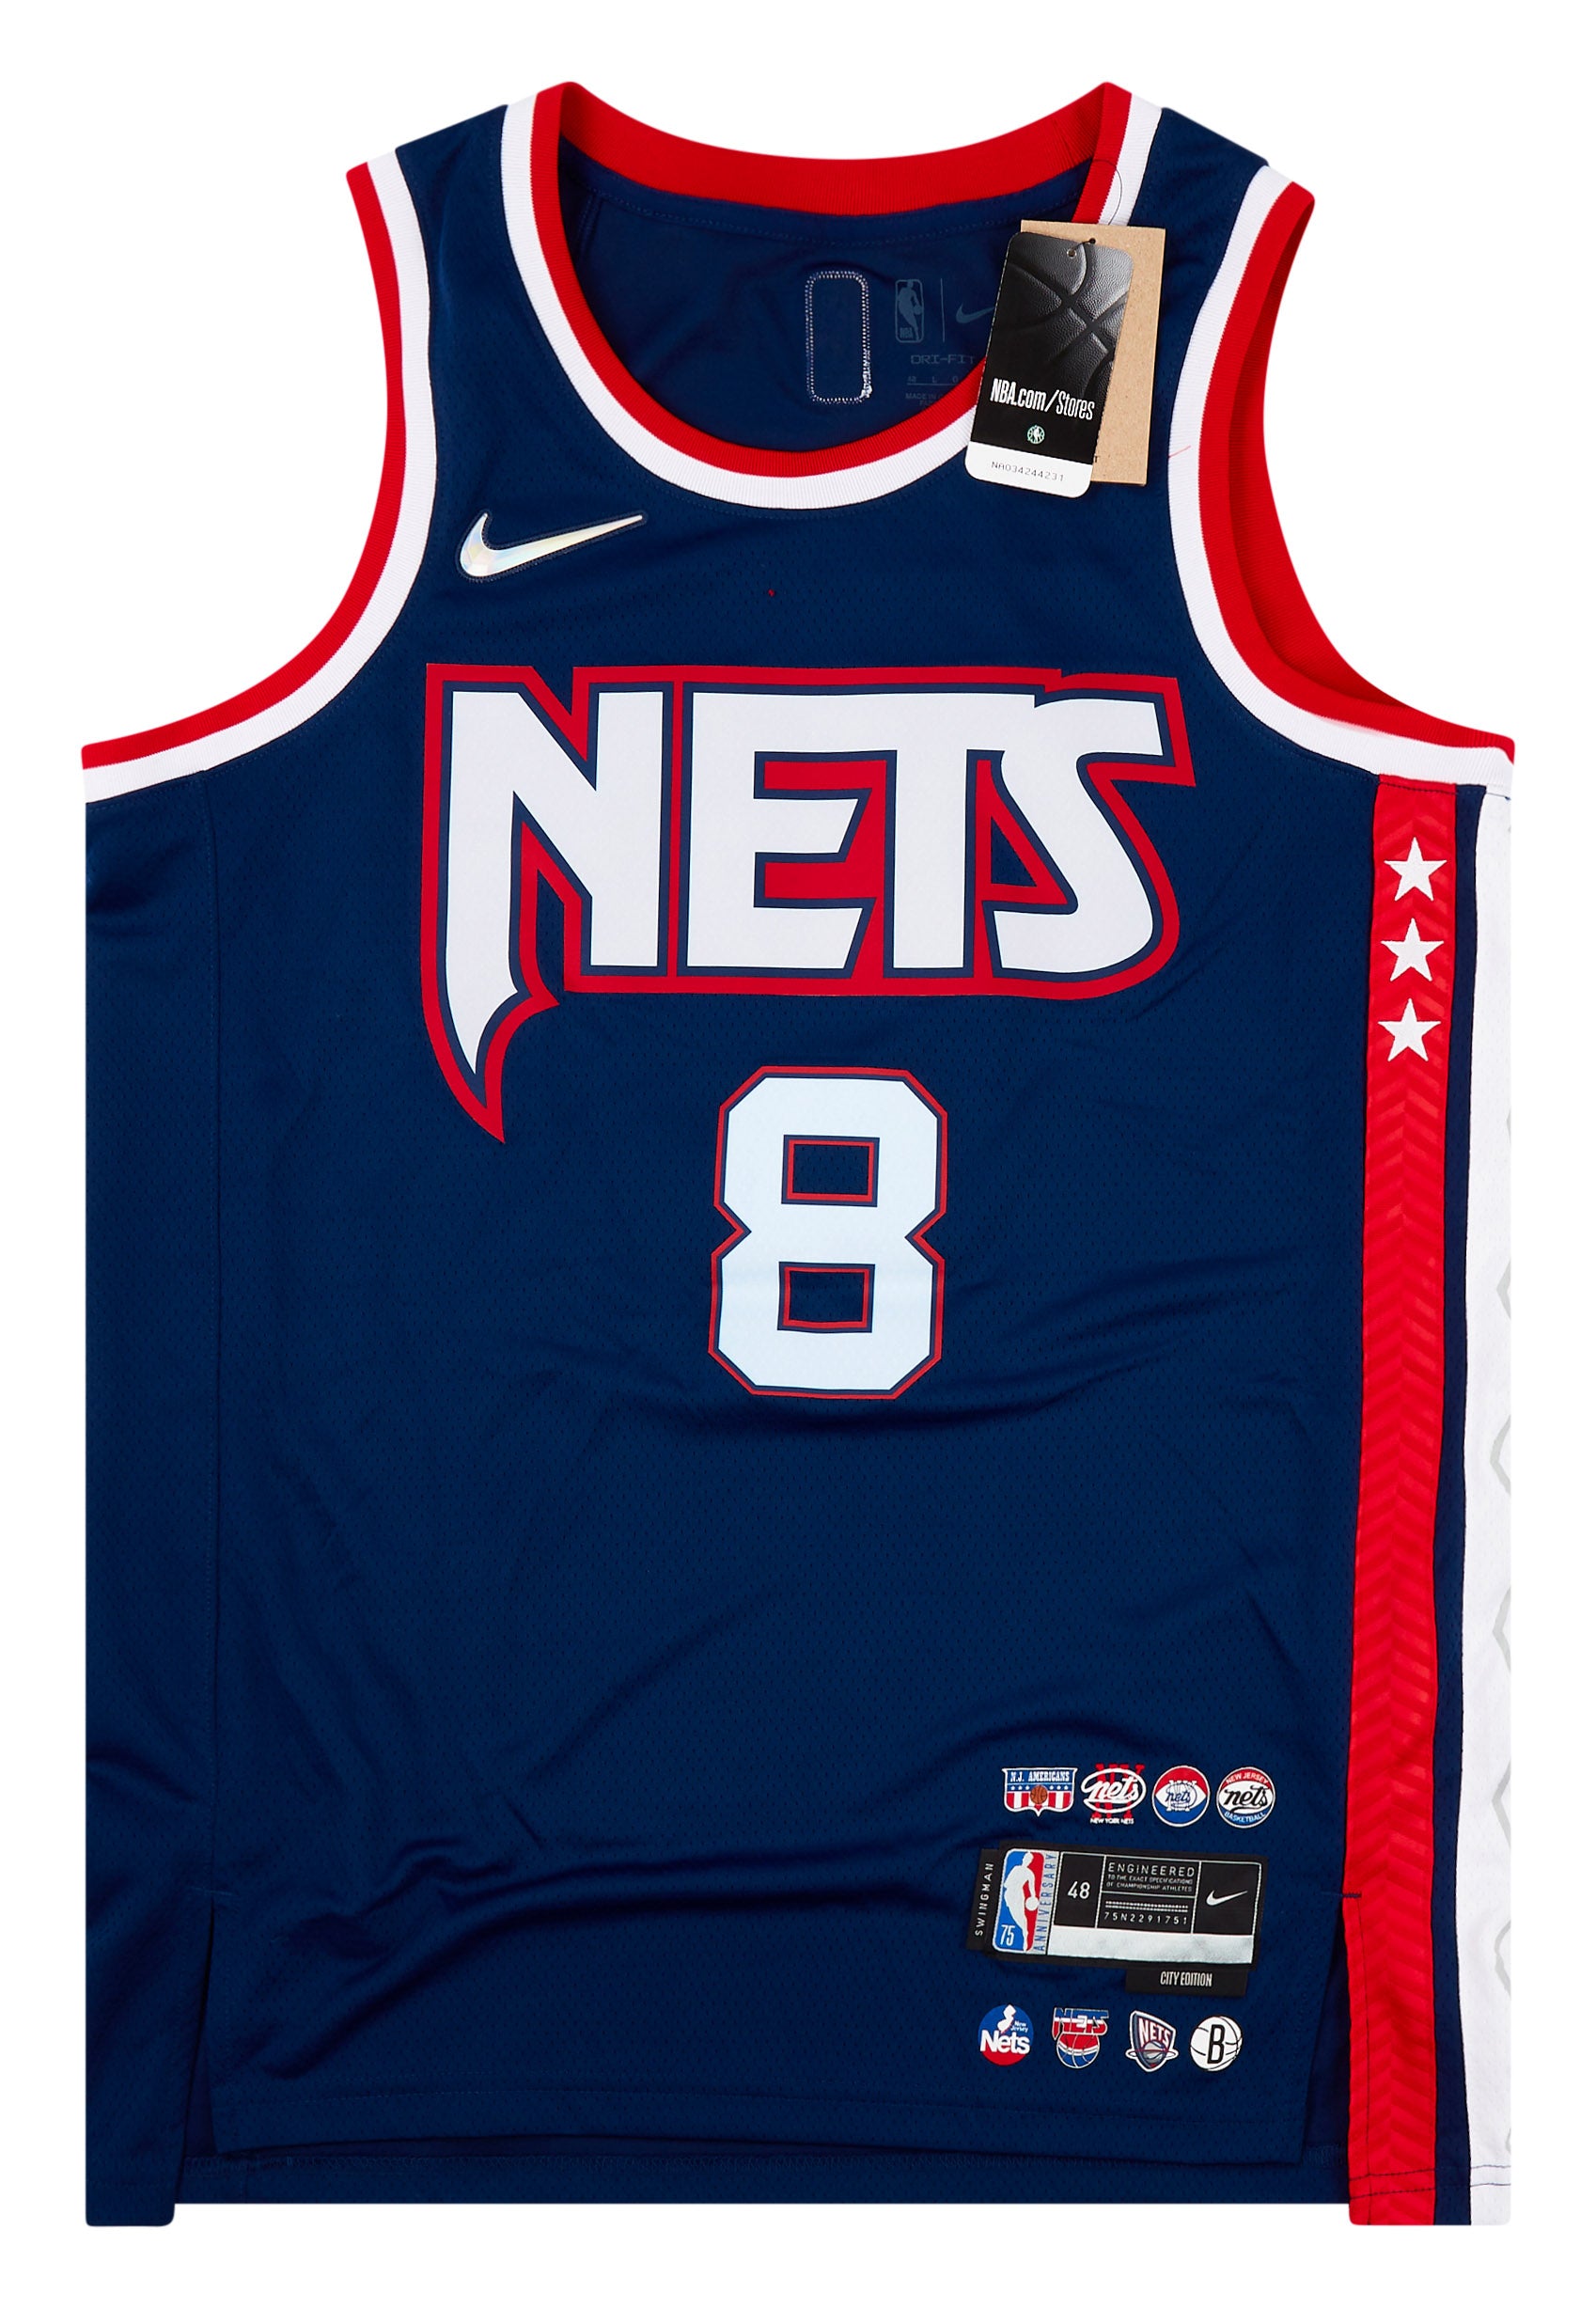 Youth S (8) Nike Brooklyn Nets Icon Edition Team Swingman Jersey